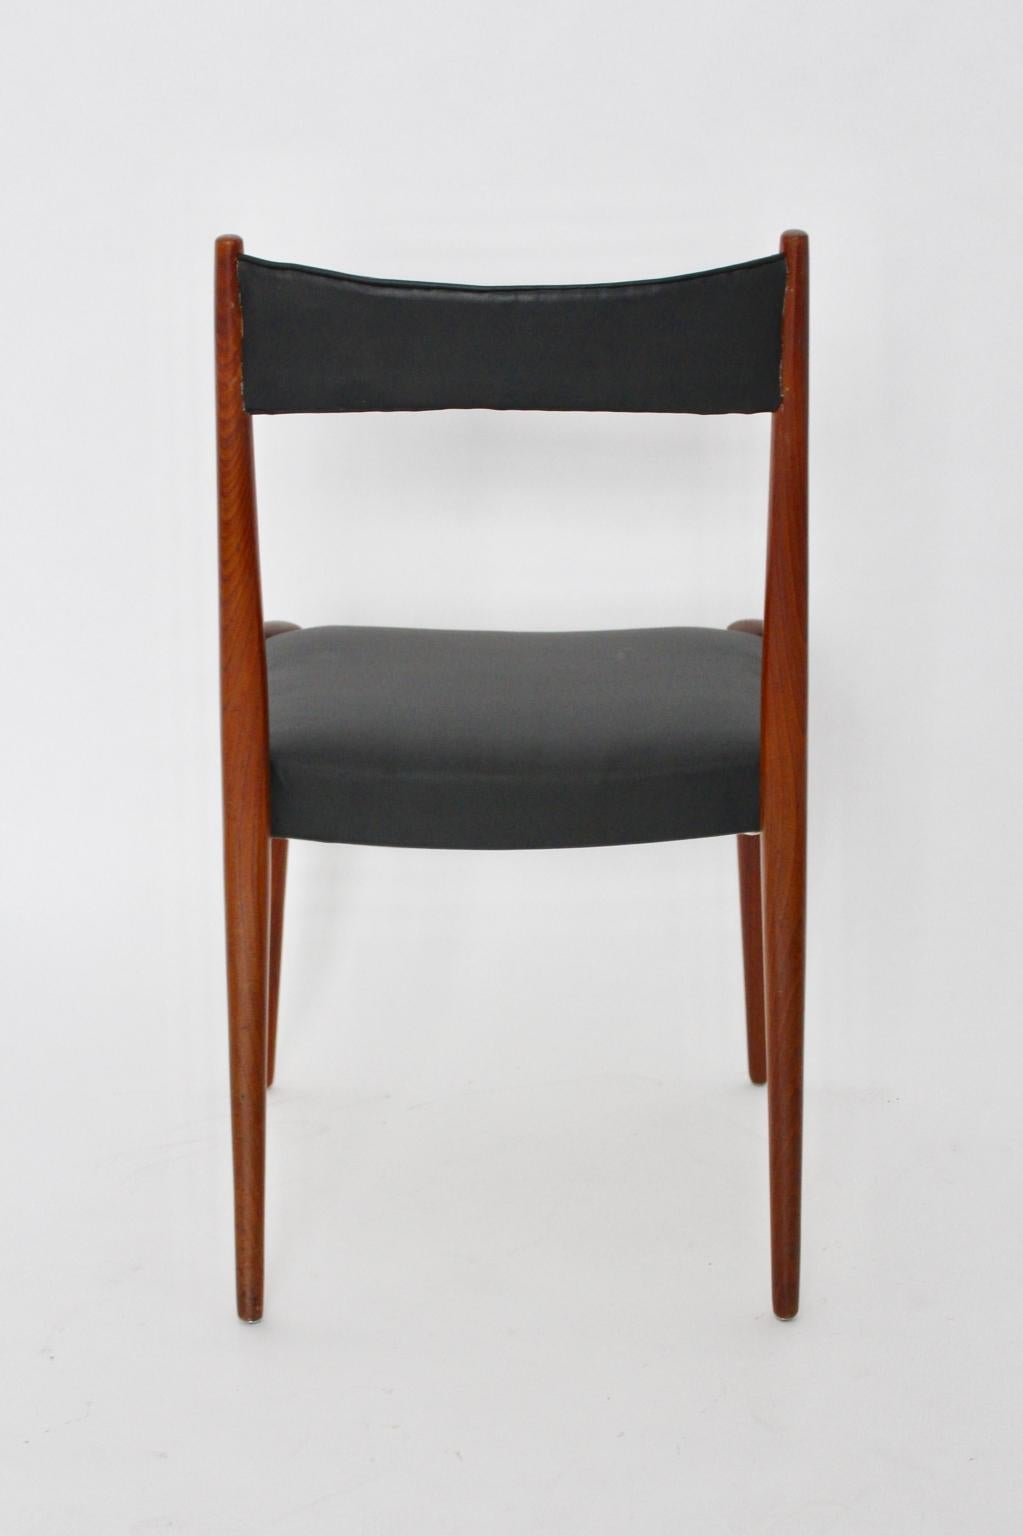 20th Century Mid-Century Modern Vintage Beech Chair by Anna-Lülja Praun 1953 Austria For Sale